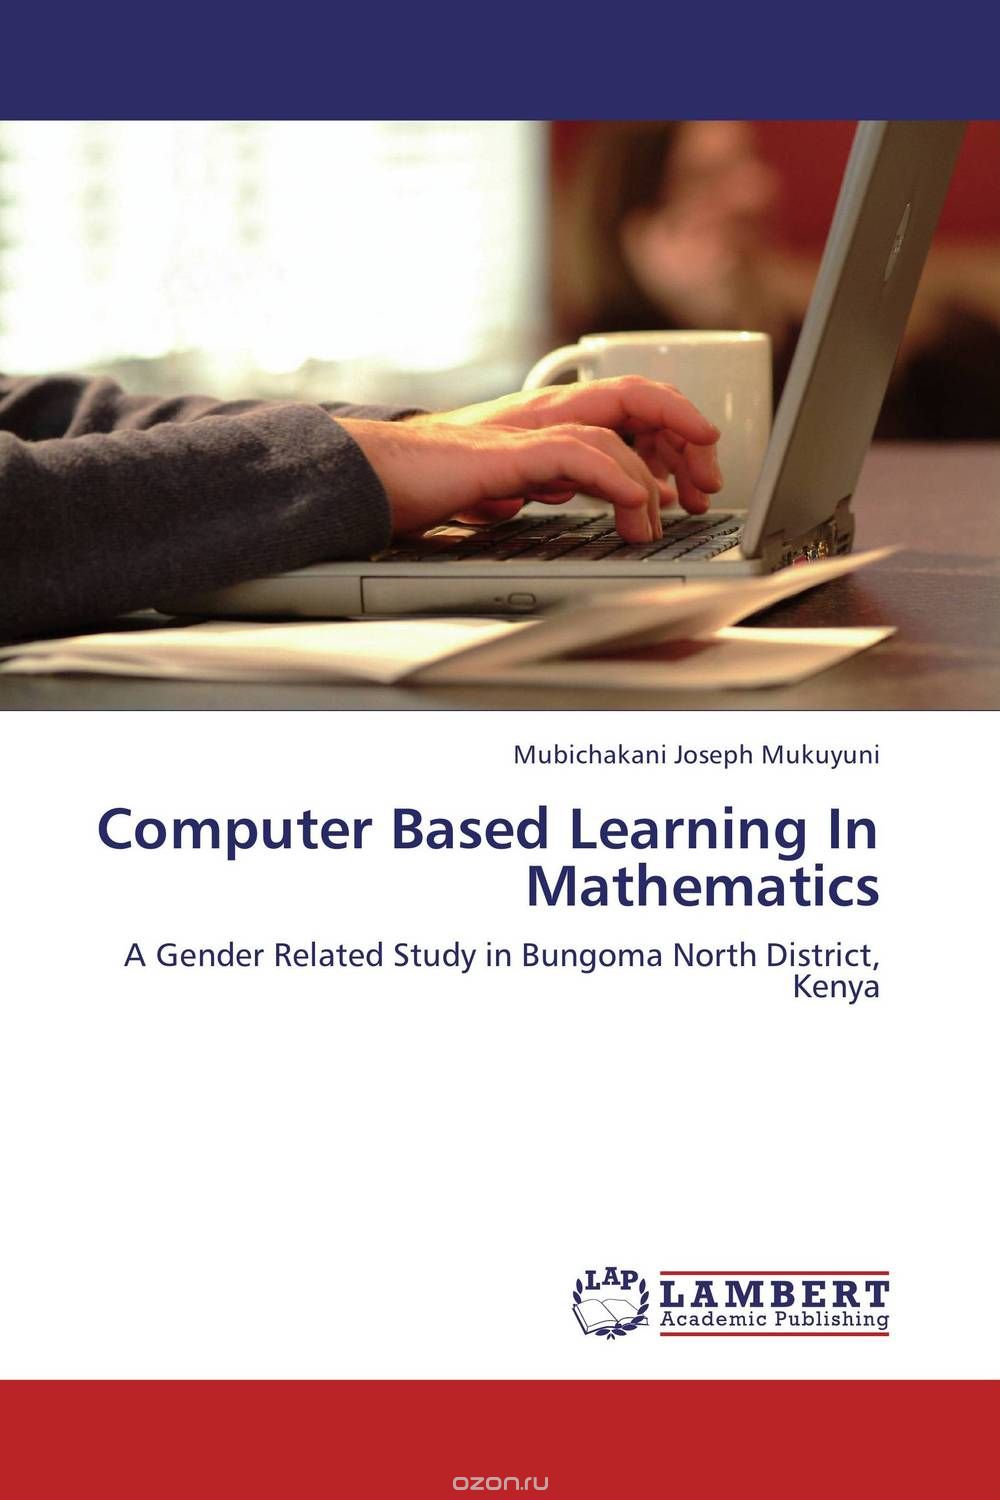 Скачать книгу "Computer Based Learning In Mathematics"